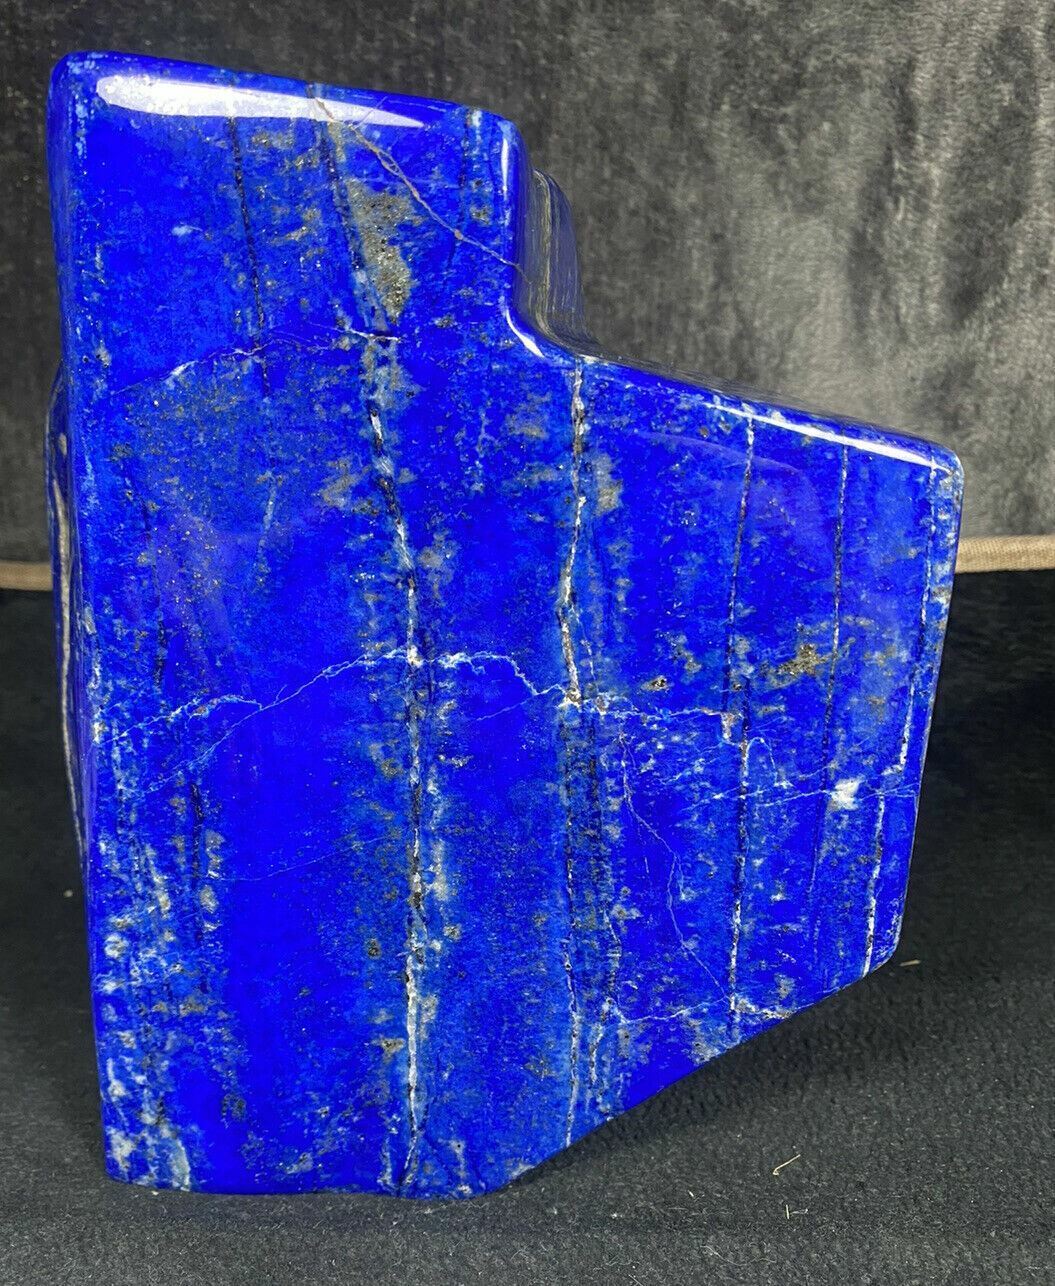 Huge 5kg Self Standing Geode Lapis Lazuli Lazurite Free form tumble Crystal